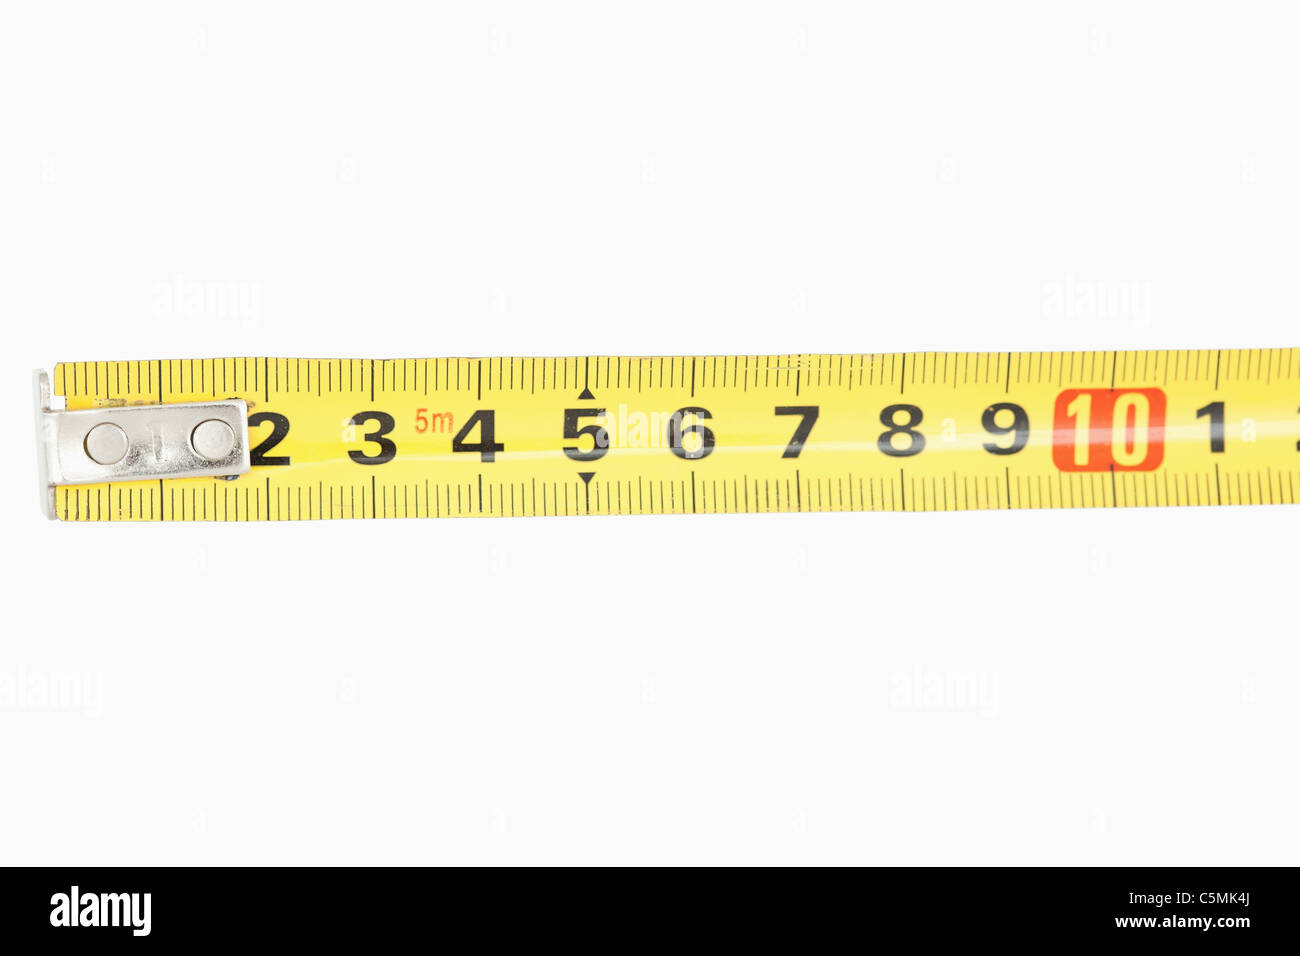 https://c8.alamy.com/comp/C5MK4J/close-up-of-a-yellow-measuring-tape-C5MK4J.jpg